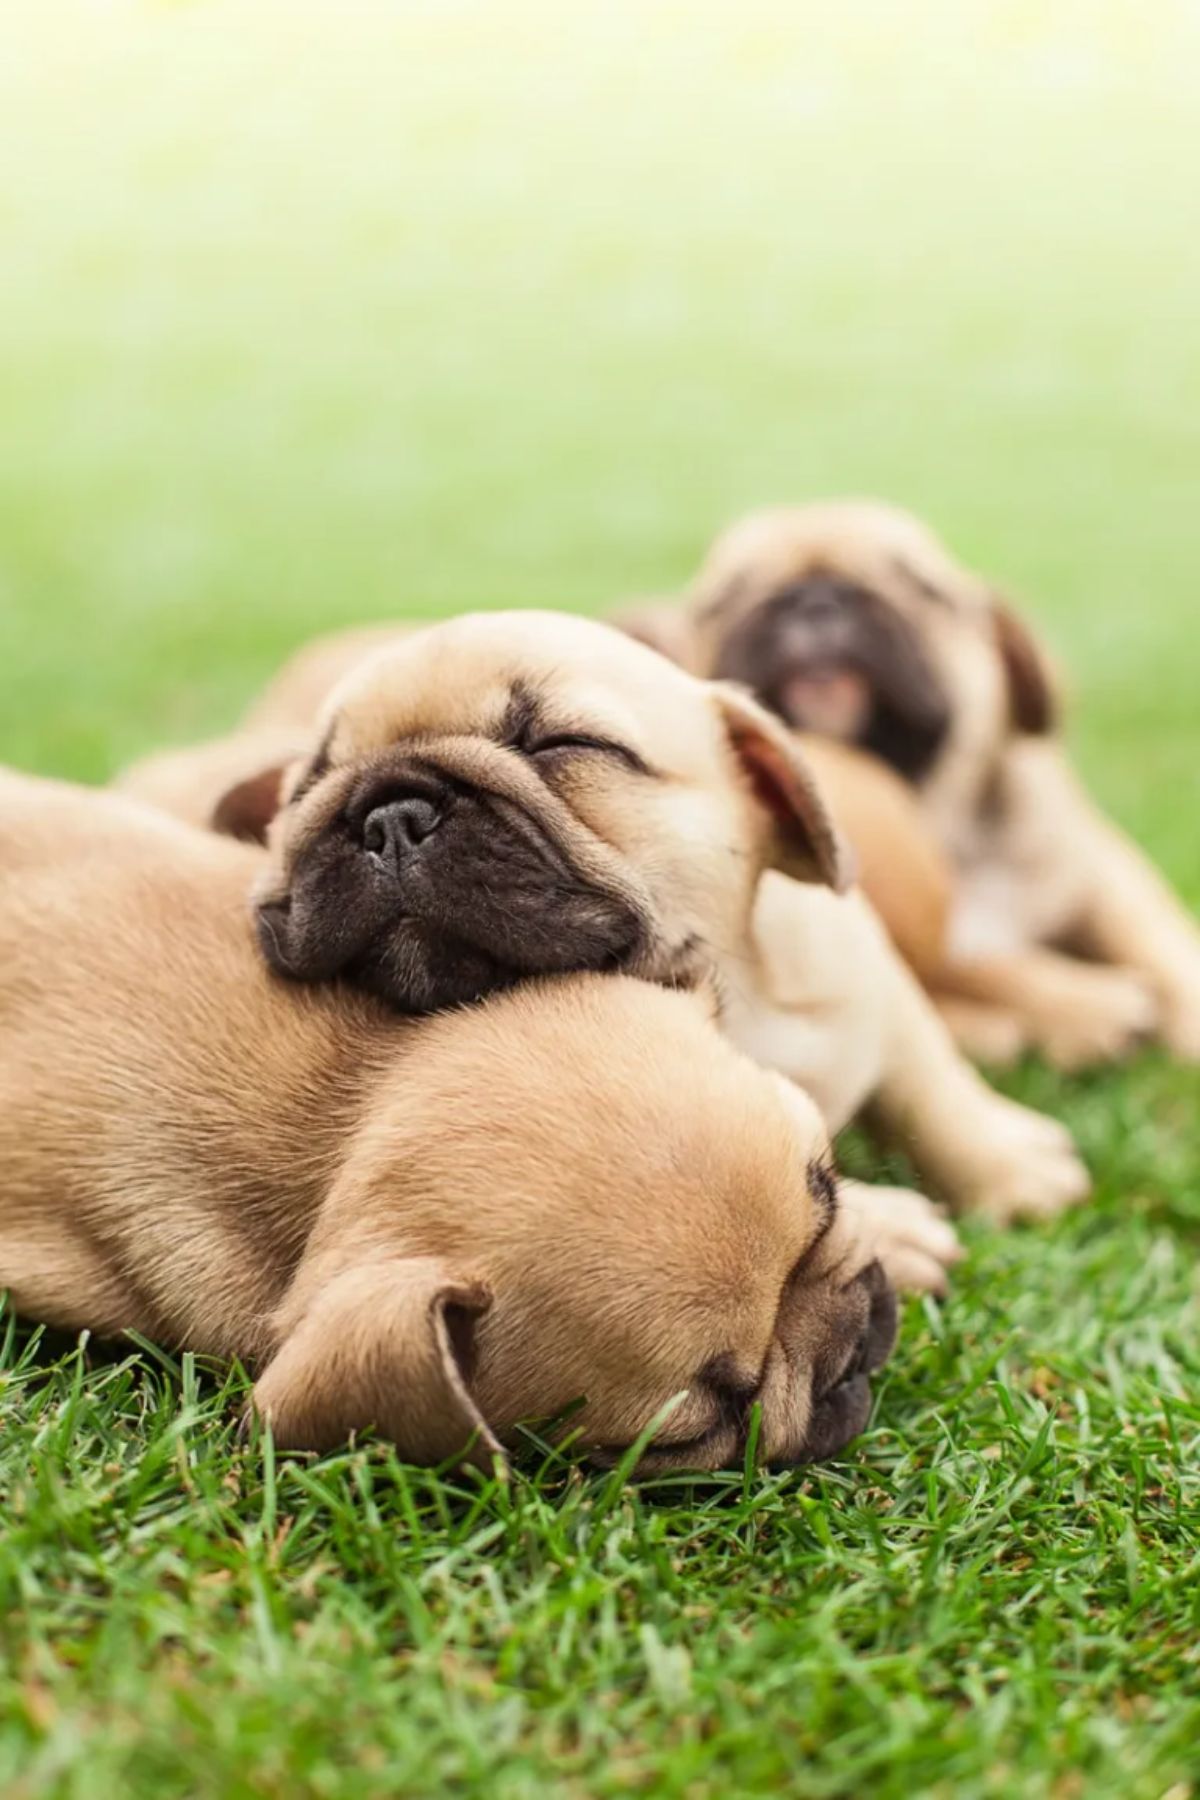 3 pug puppies sleeping cuddled together on grass